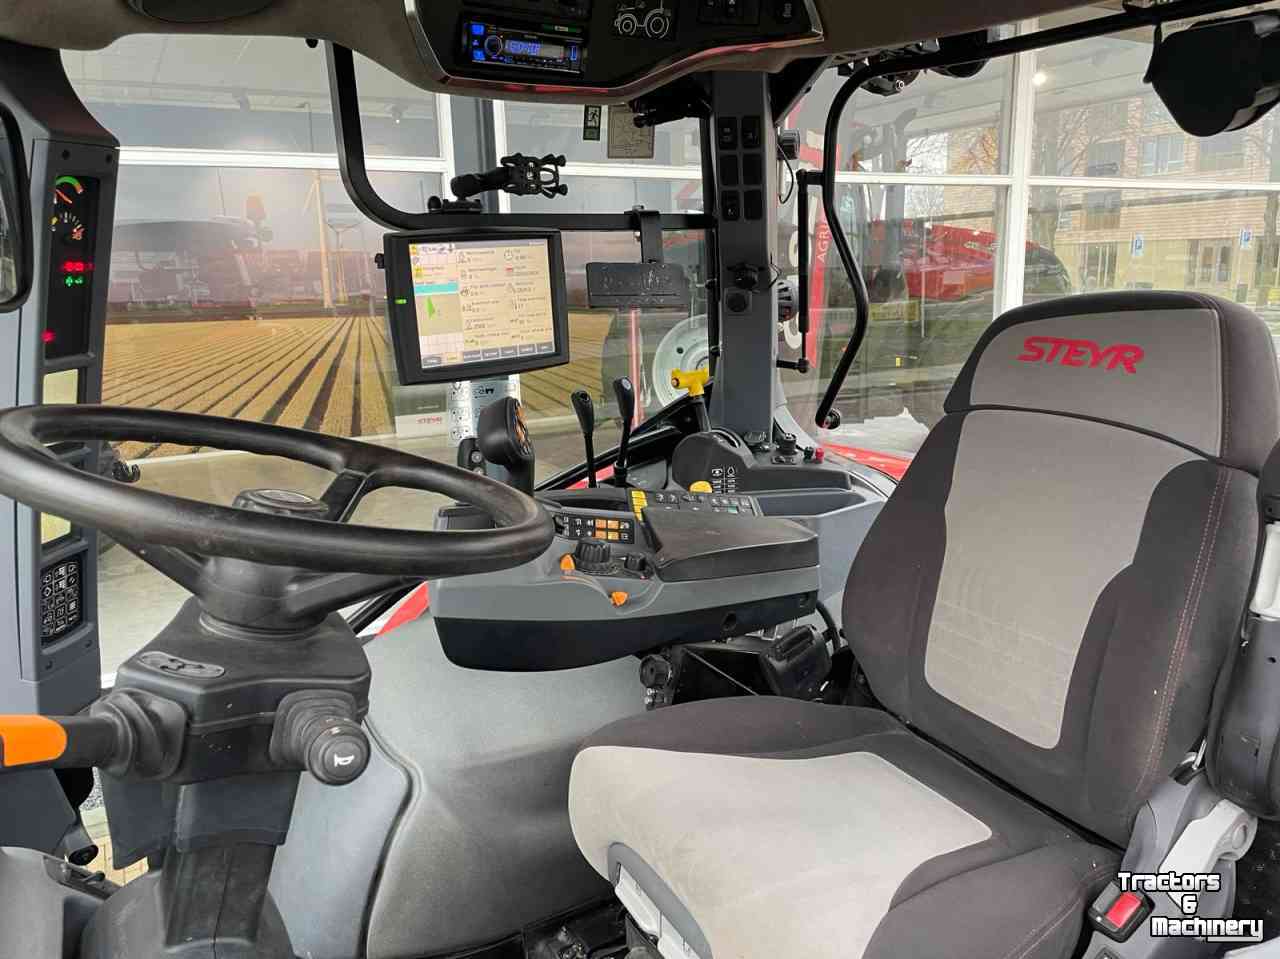 Traktoren Steyr Expert 4130 CVT